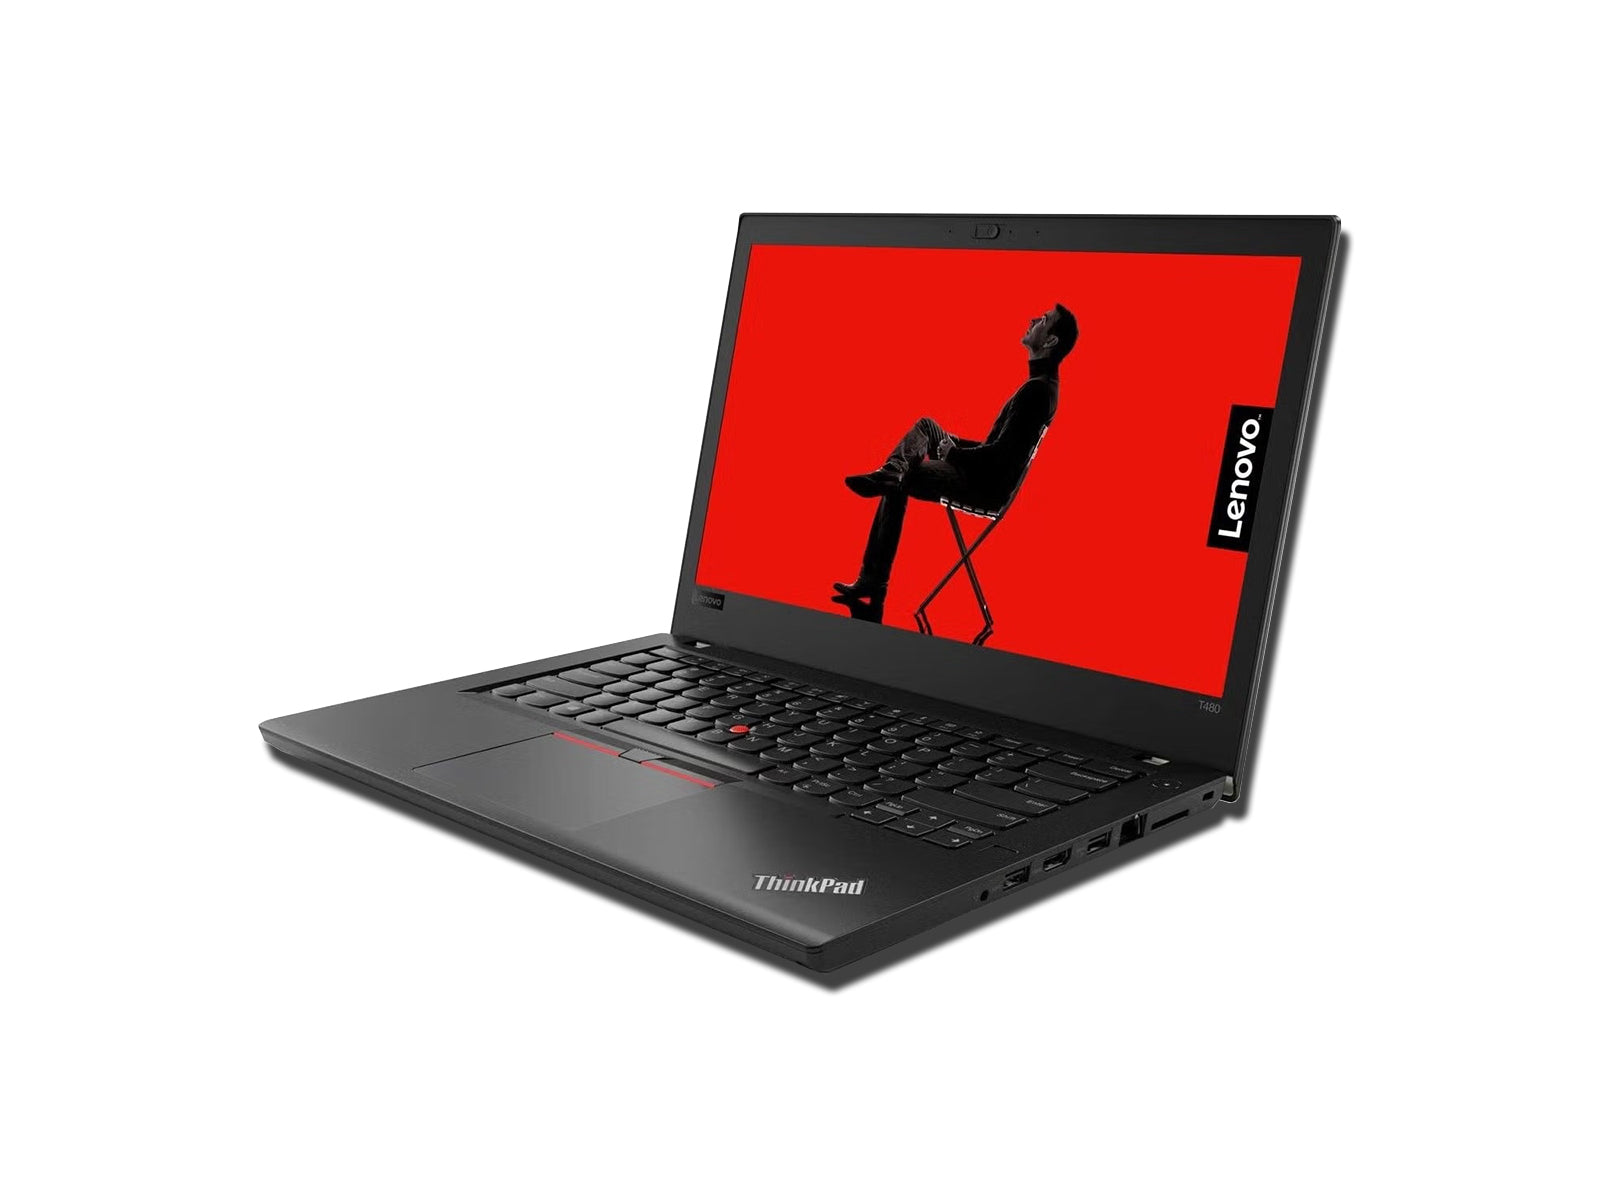 Lenovo ThinkPad T480s Front Angled View